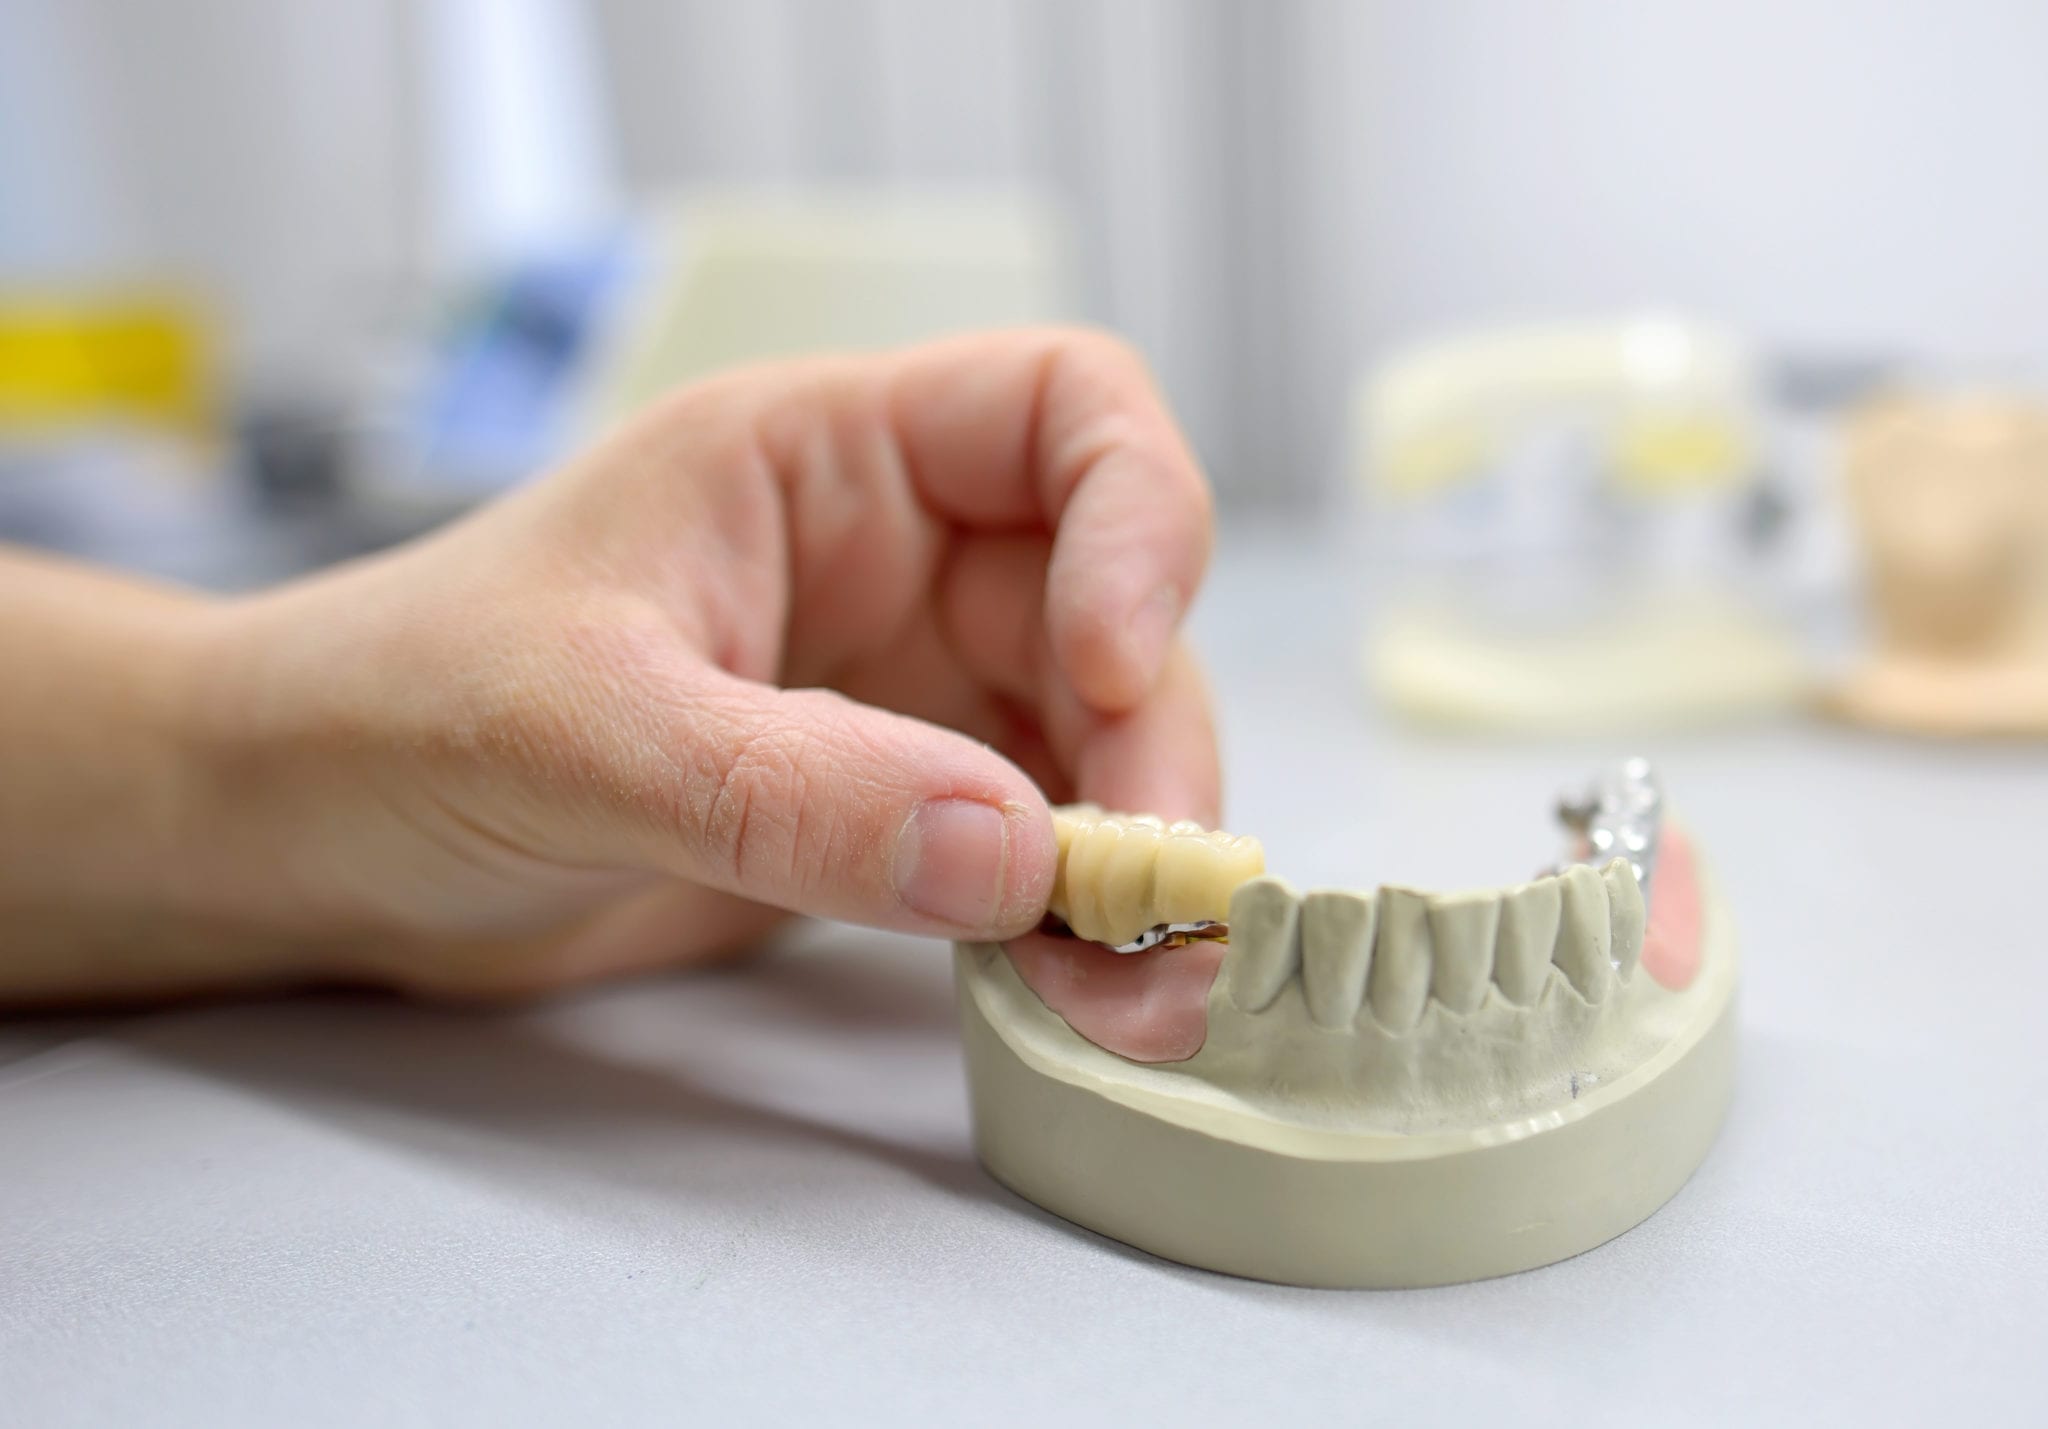 Benefits of Choosing a Fixed Bridge Over Dental Implants